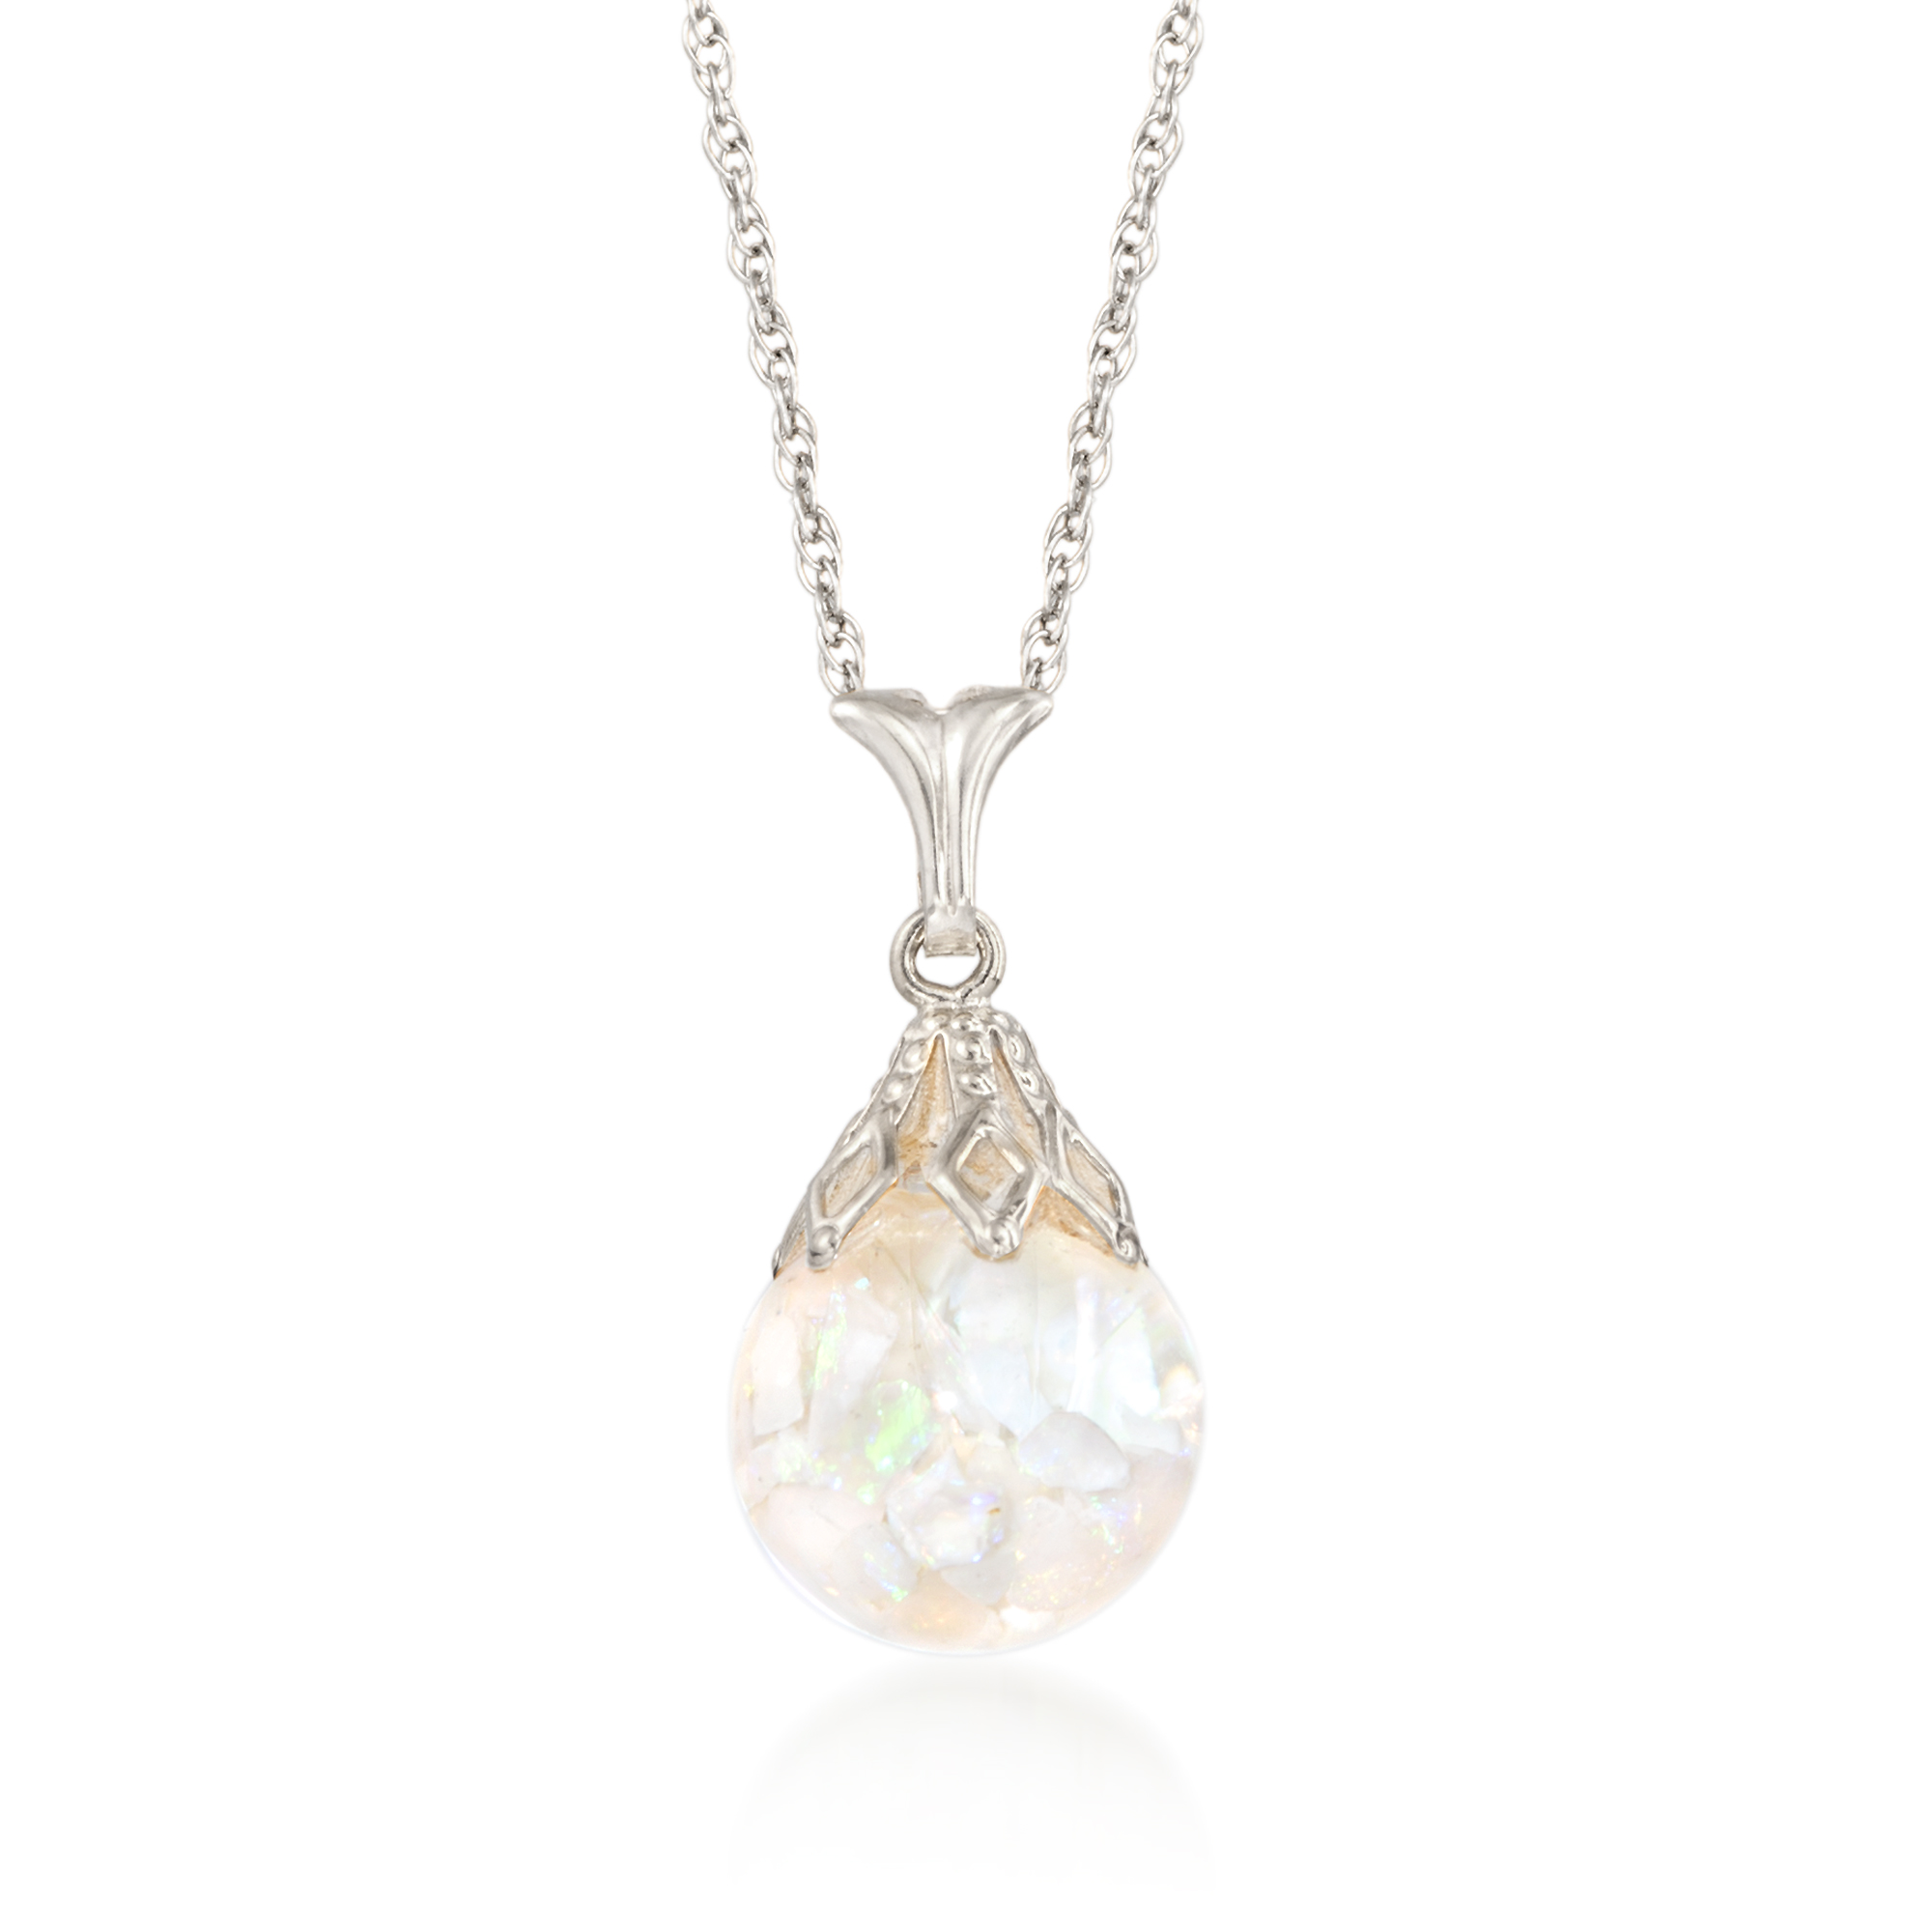 Australian Floating opal necklace Sterling silver